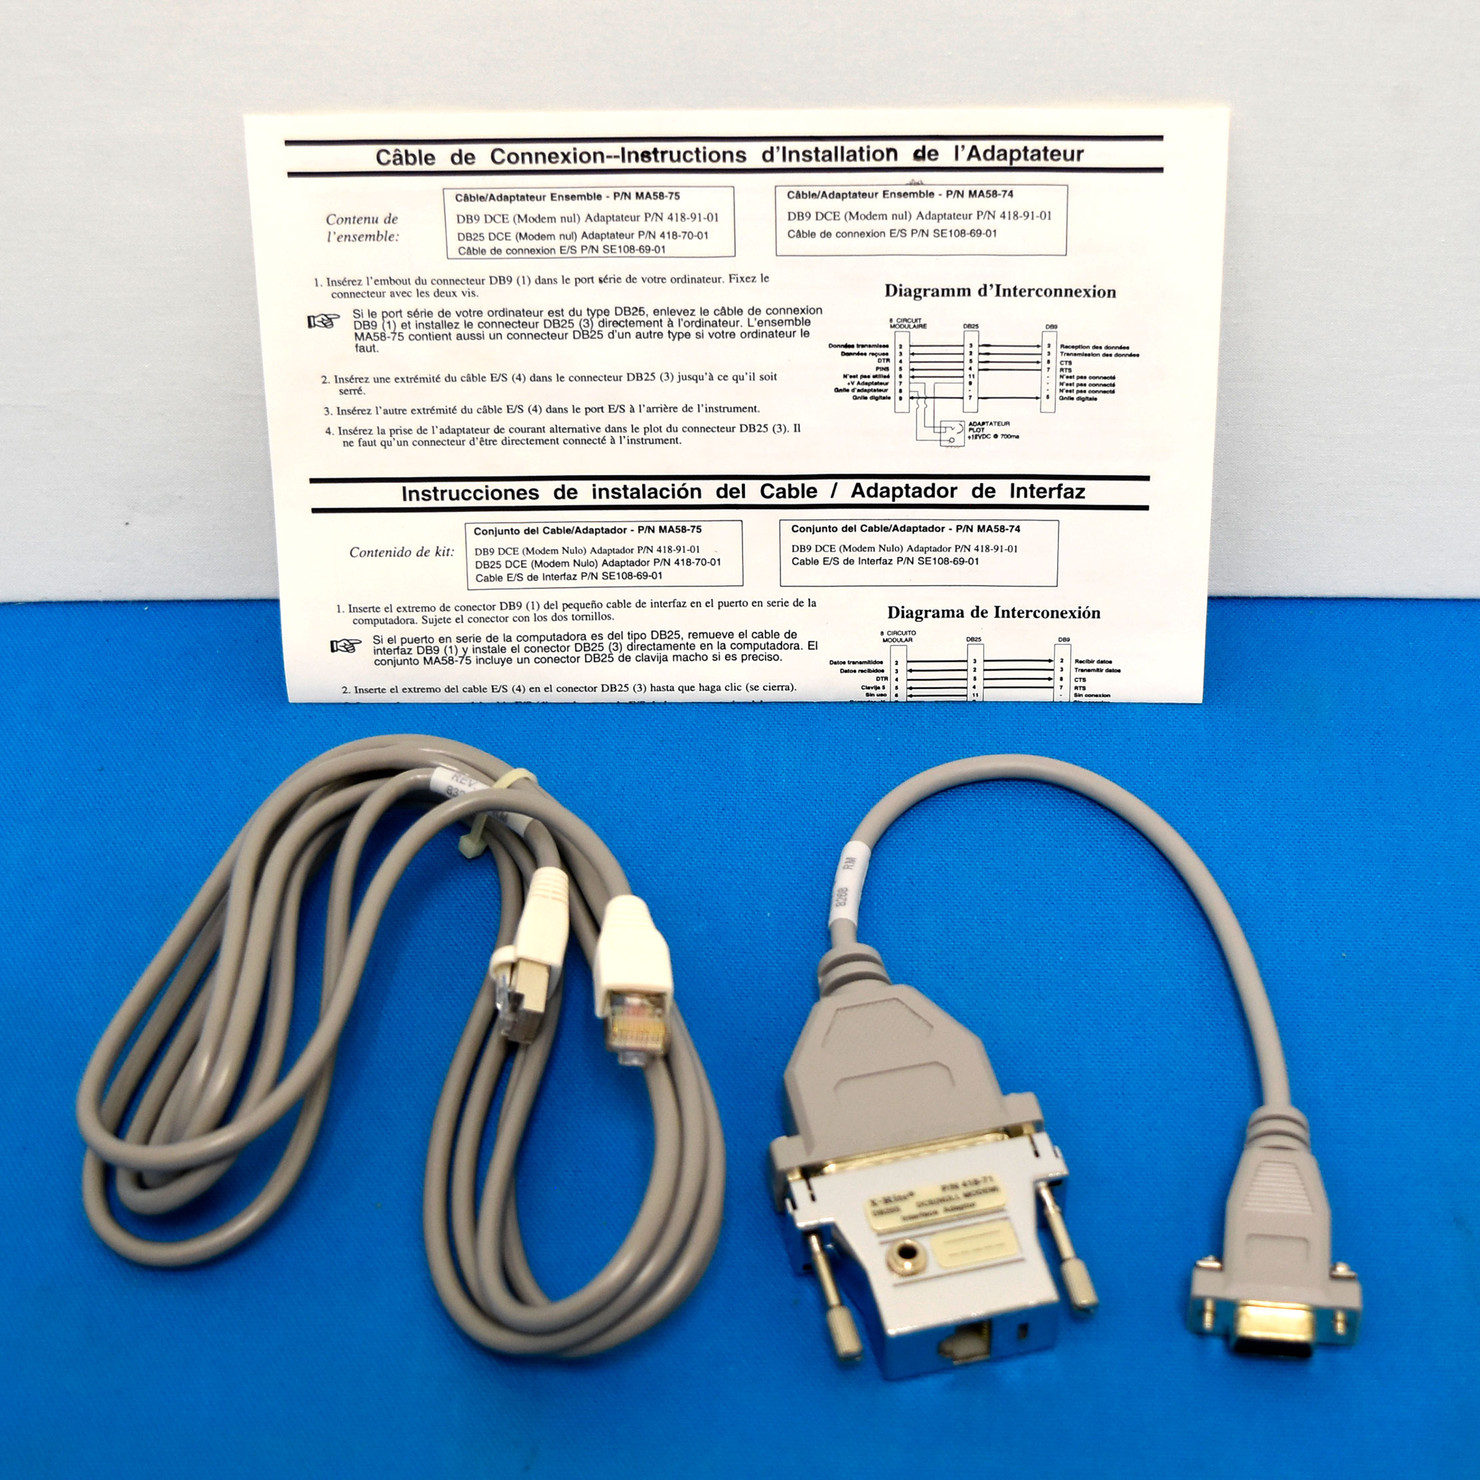 xrite x-rite SpectroDensitometer Interface Data Cable SE108-91 SE108-92 